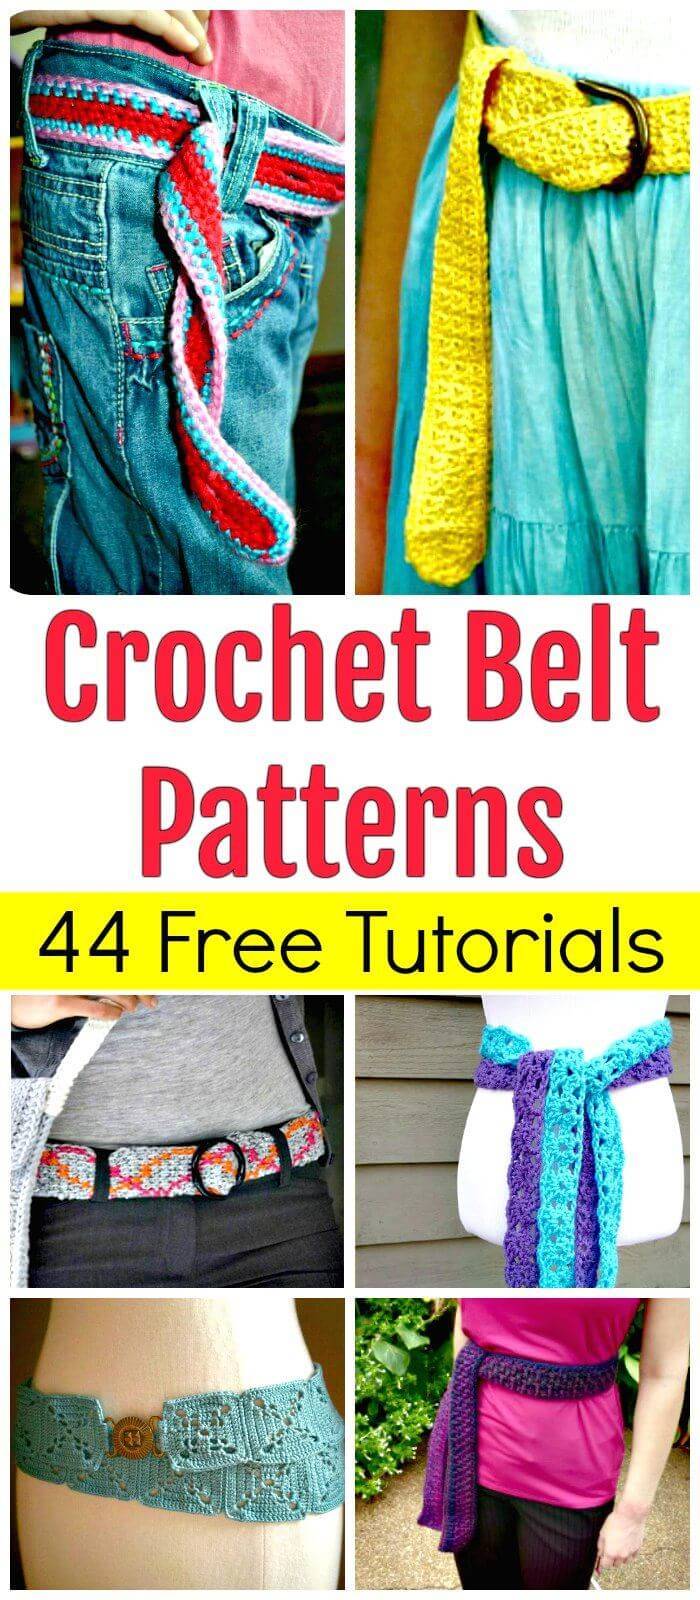 Crochet Belt Patterns – 44 Free Tutorials - DIY Crafts - Free Crochet Patterns